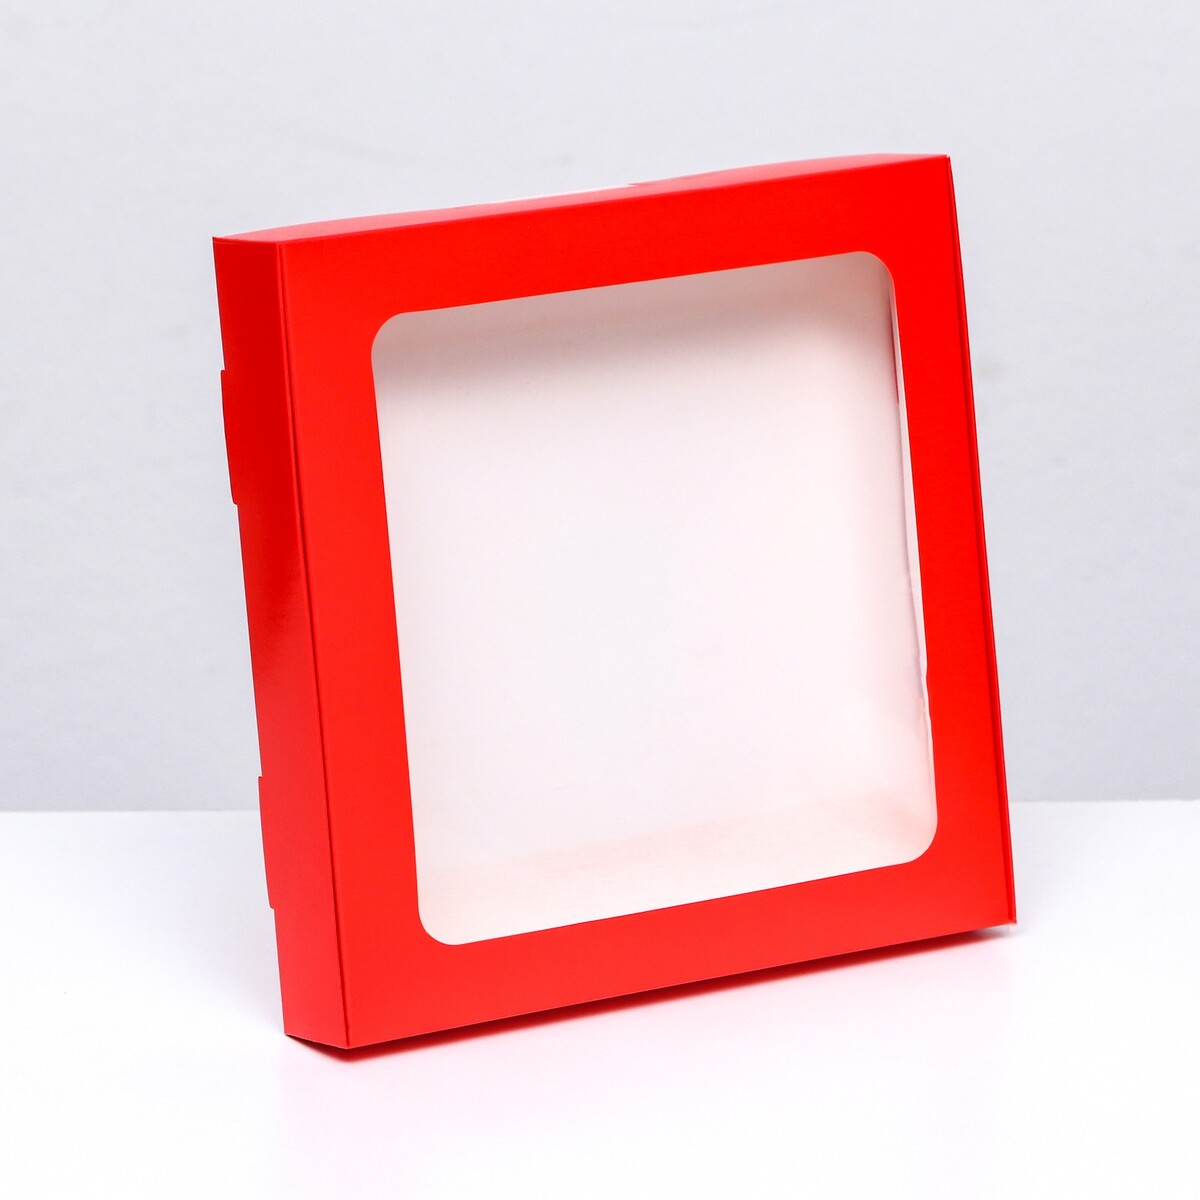 Коробка самосборная, красная с окном, 19 х 19 х 3 см коробка самосборная с окном золотая 16 х 16 х 3 см